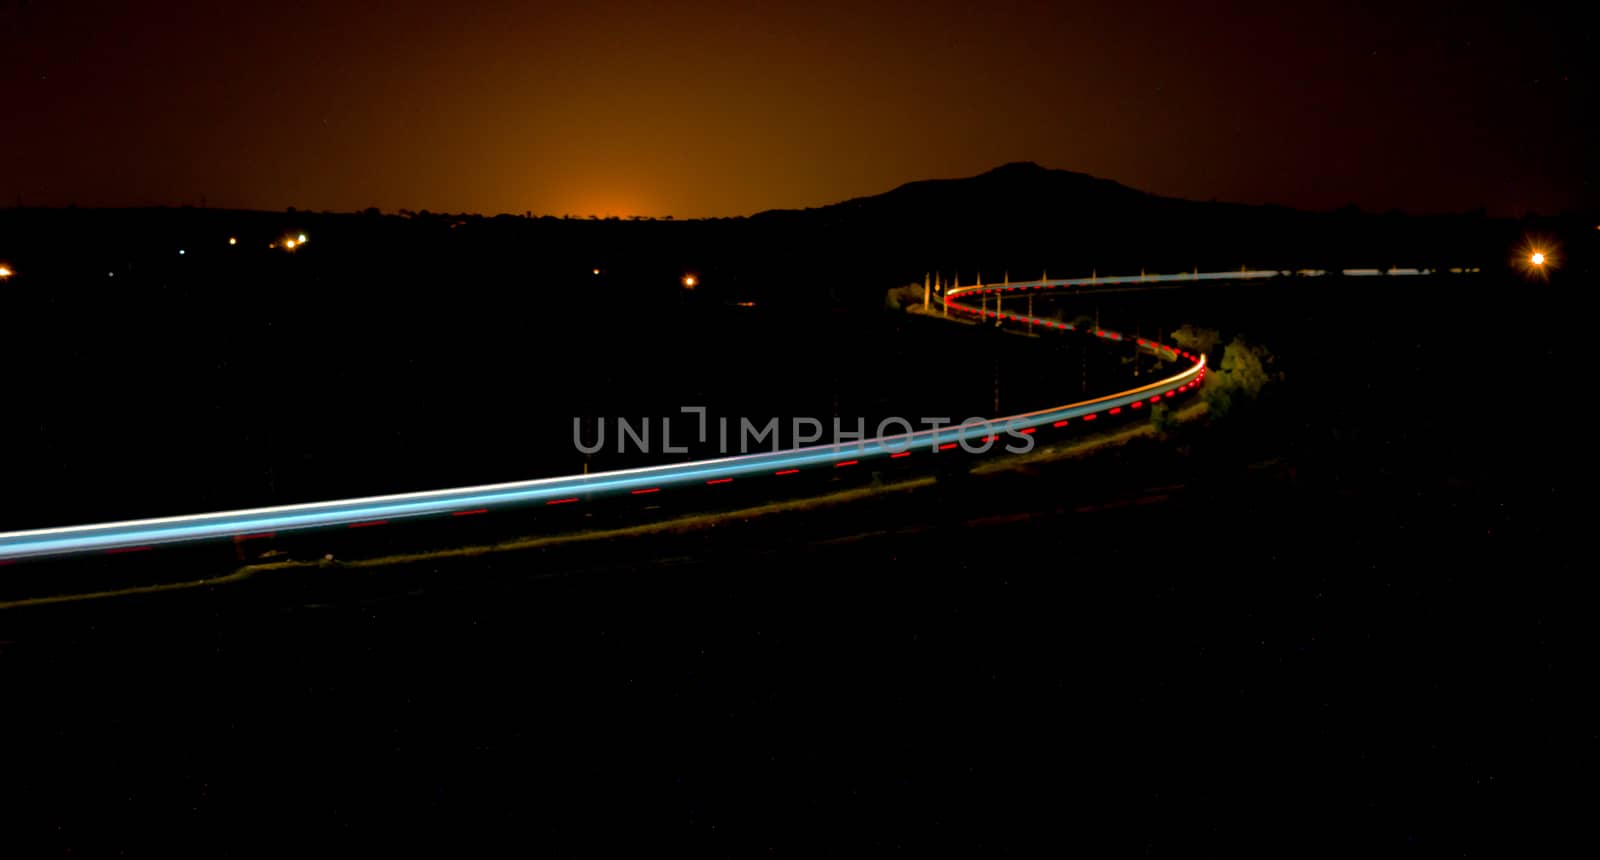 Long exposure slow shutter, colorful  photo of a train passing over s shaped rail track in Ranjangaon, Maharashtra, India.